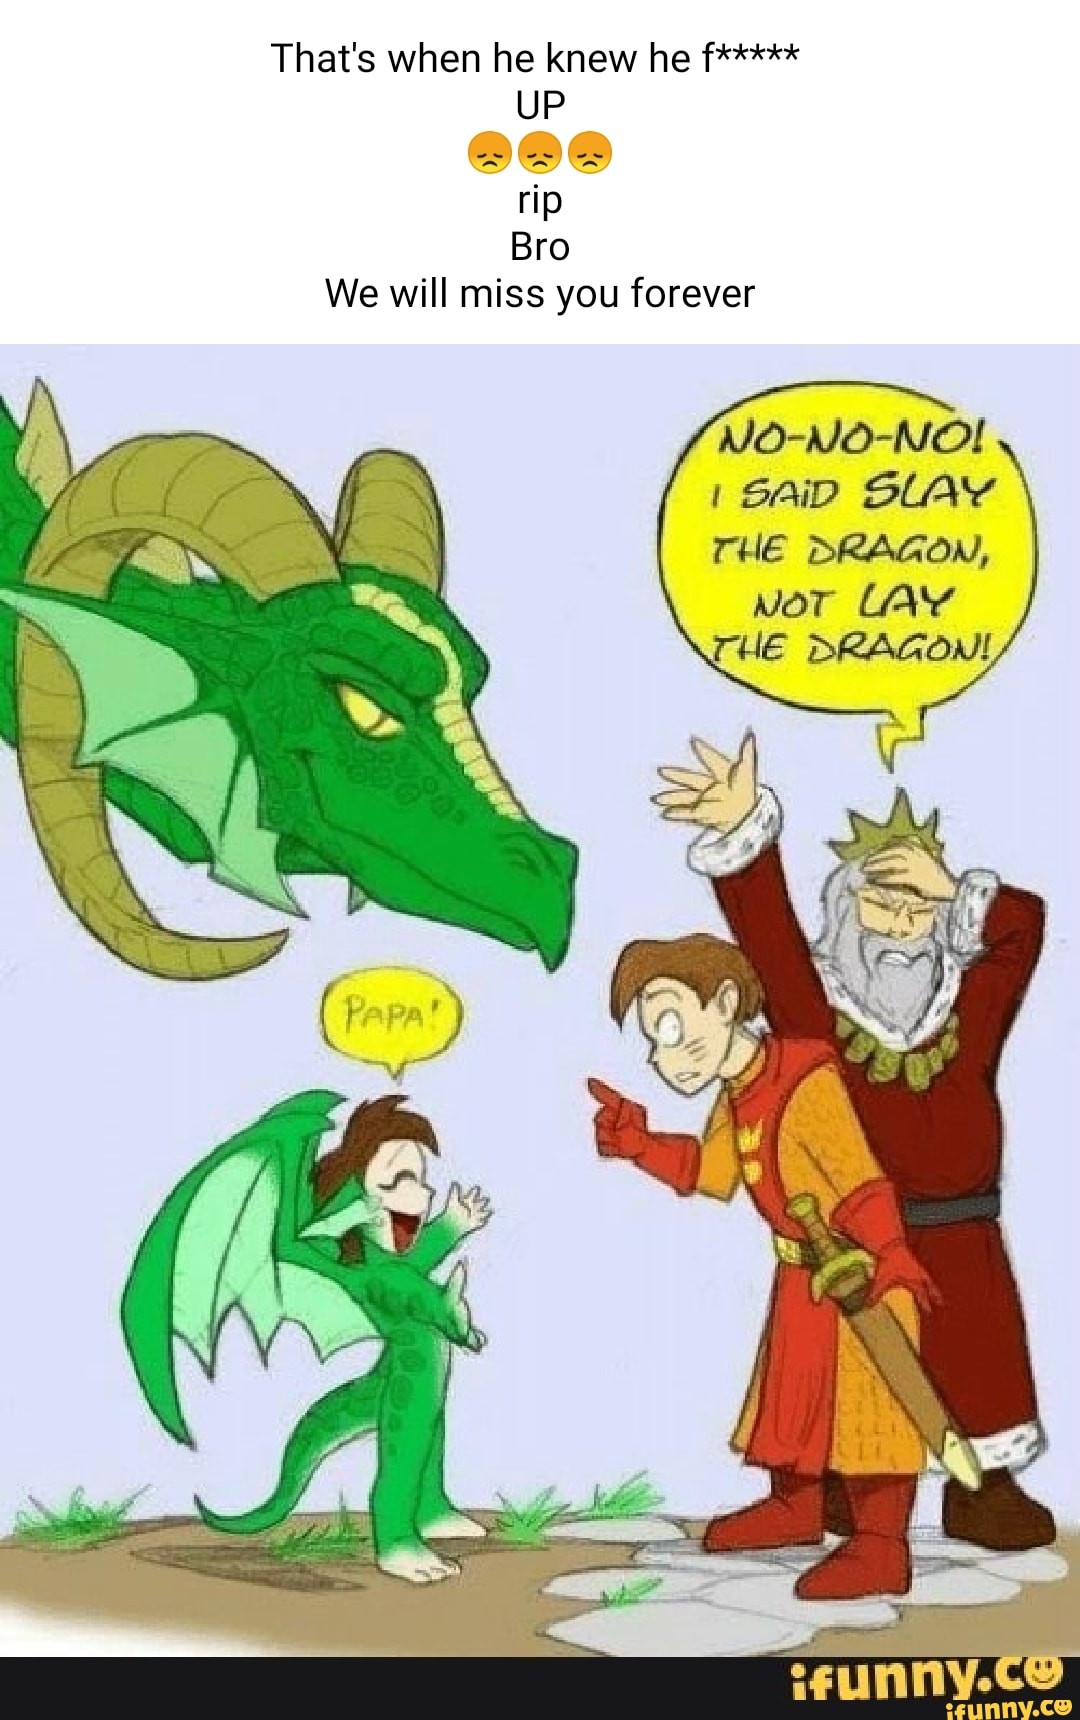 Slay the dragon not lay the dragon